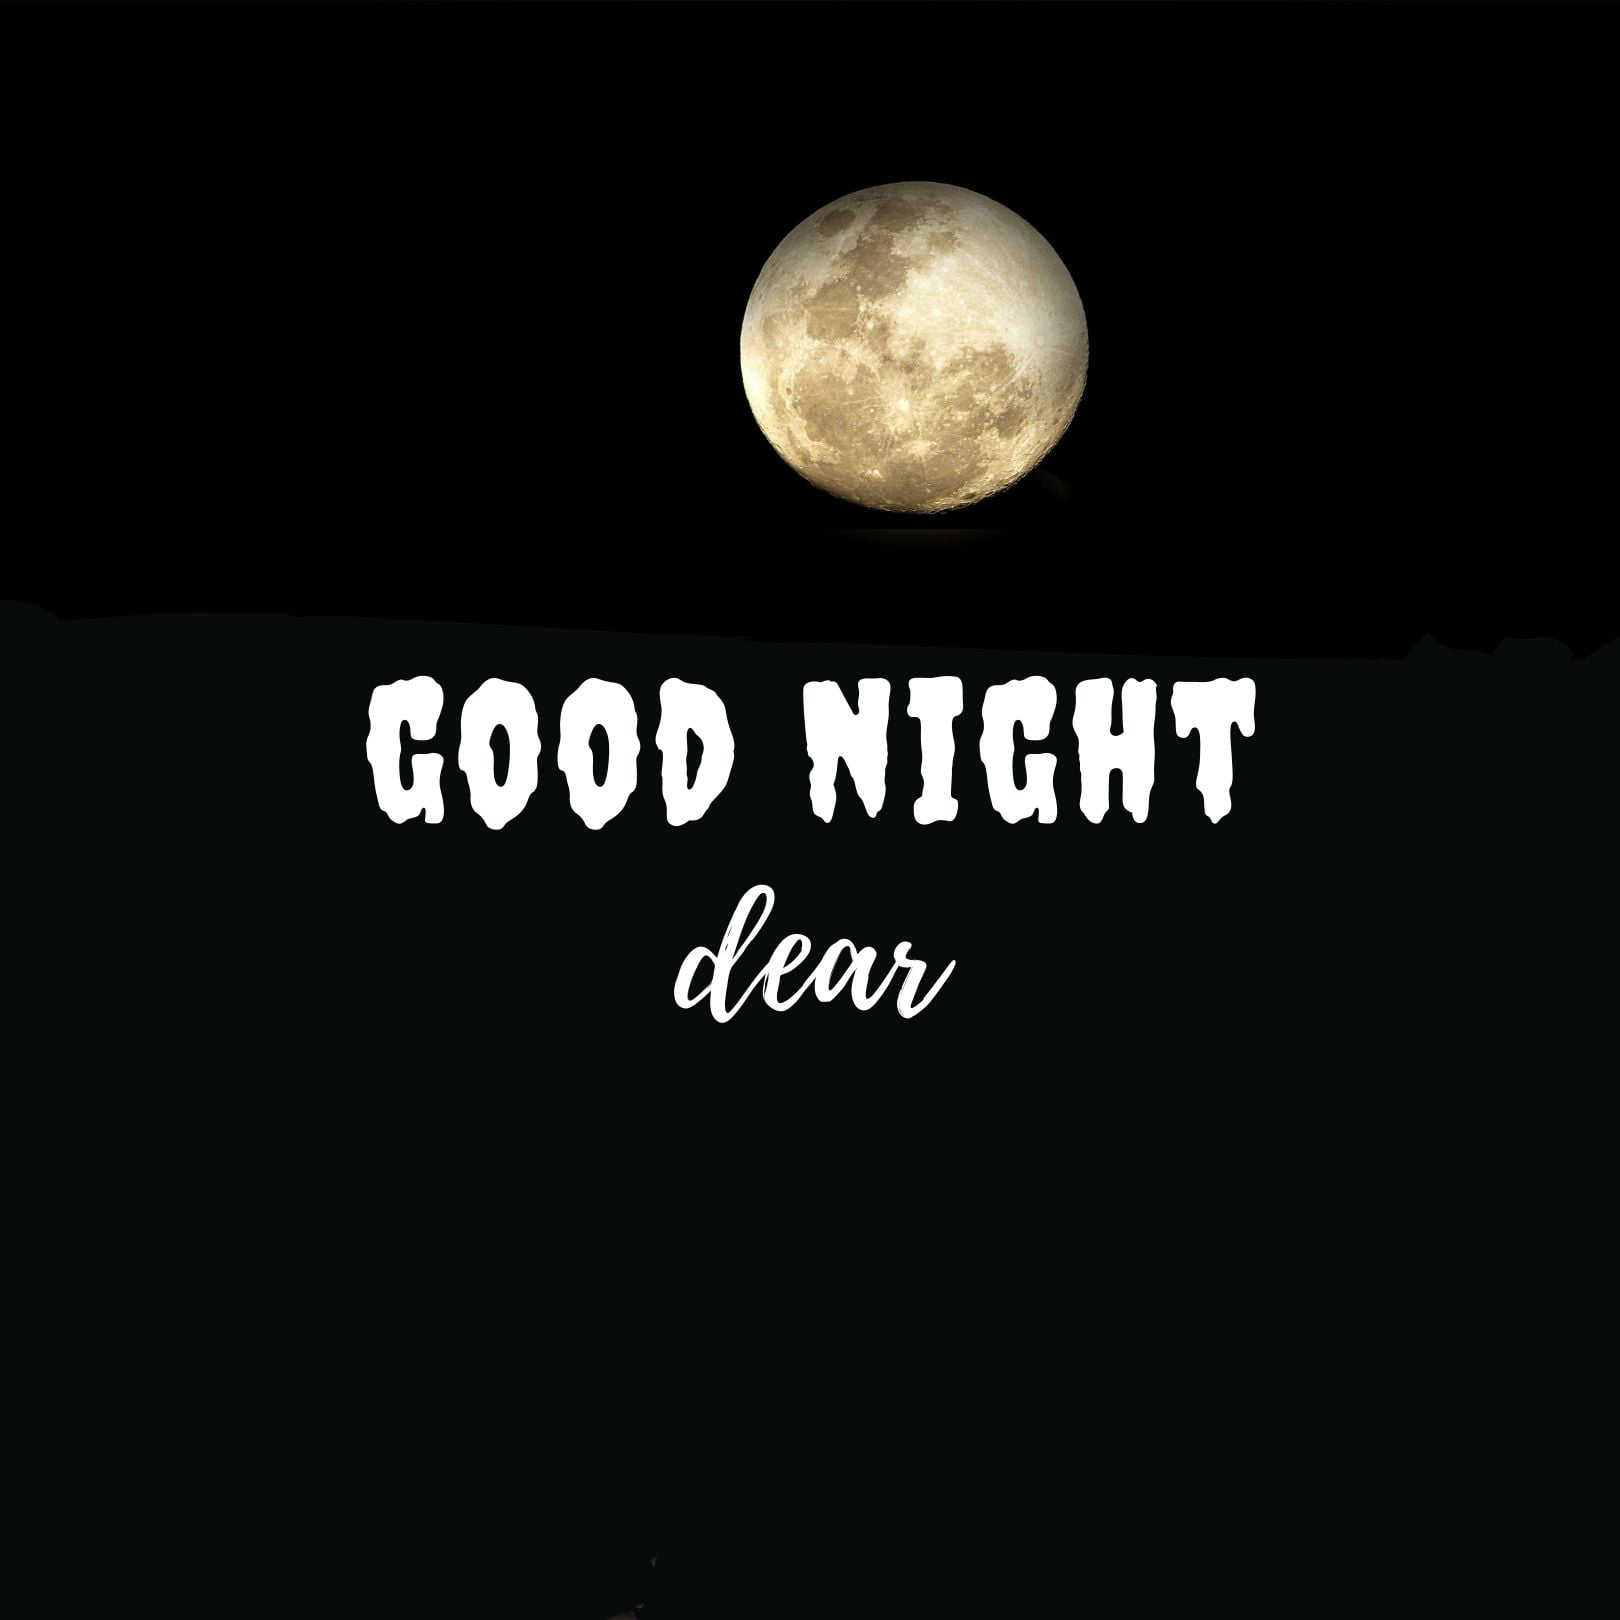 🔥 Good Night Dear Download free - Images SRkh